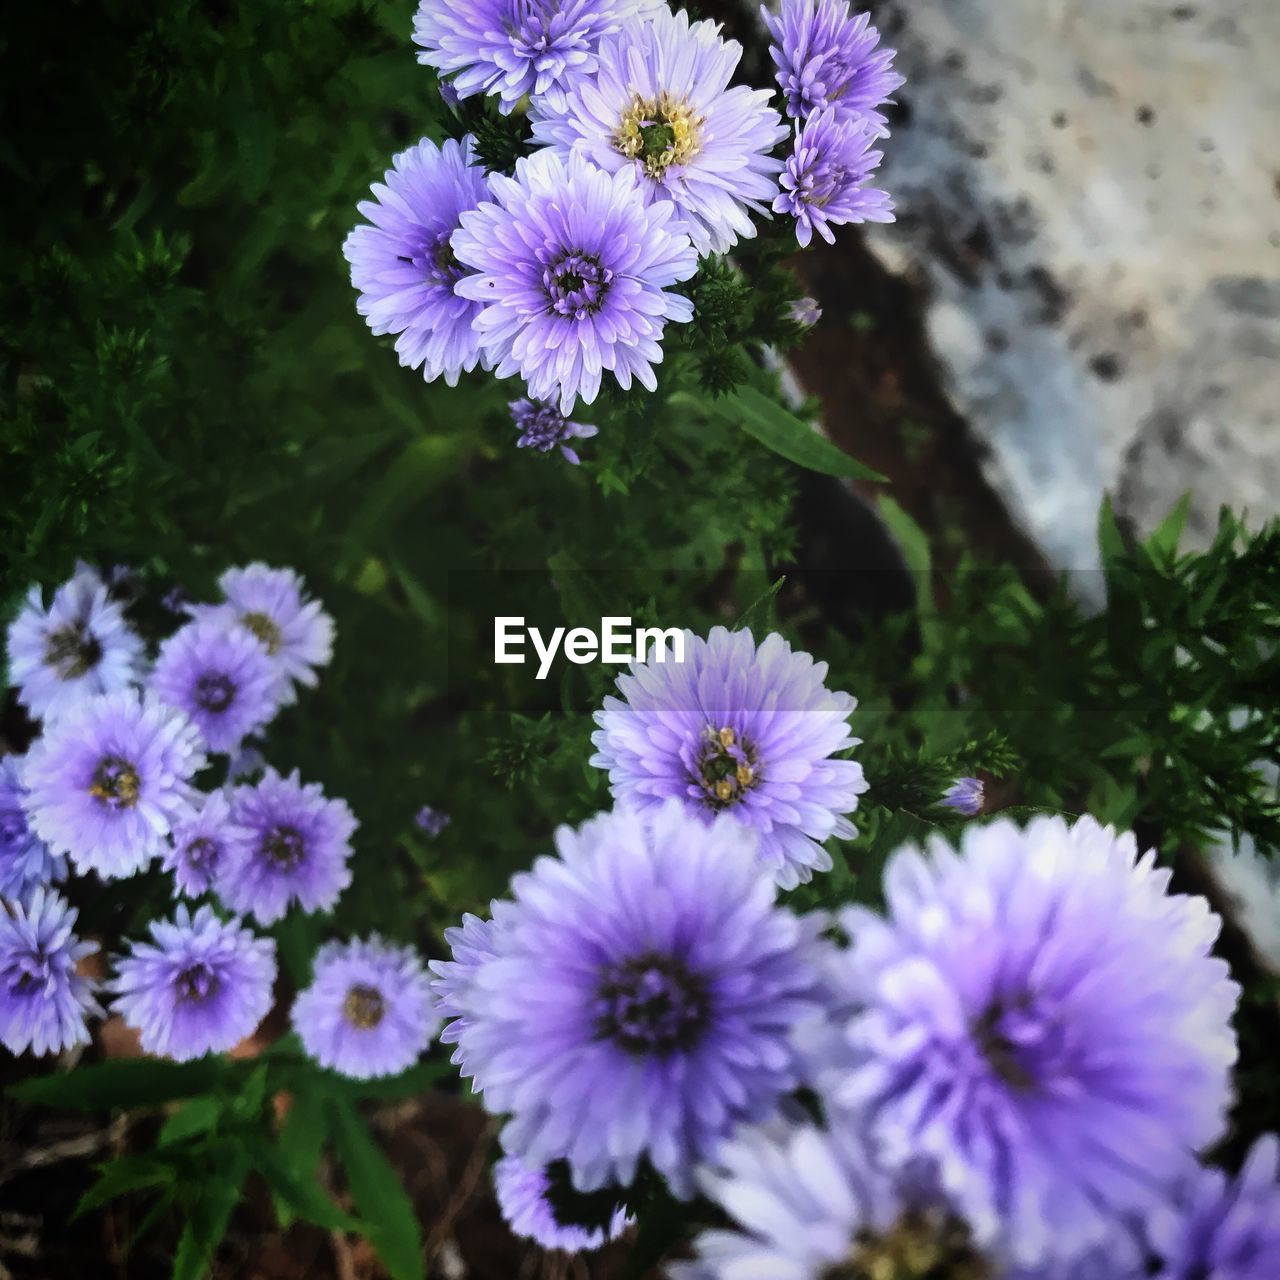 Close-up of purple flowering plants